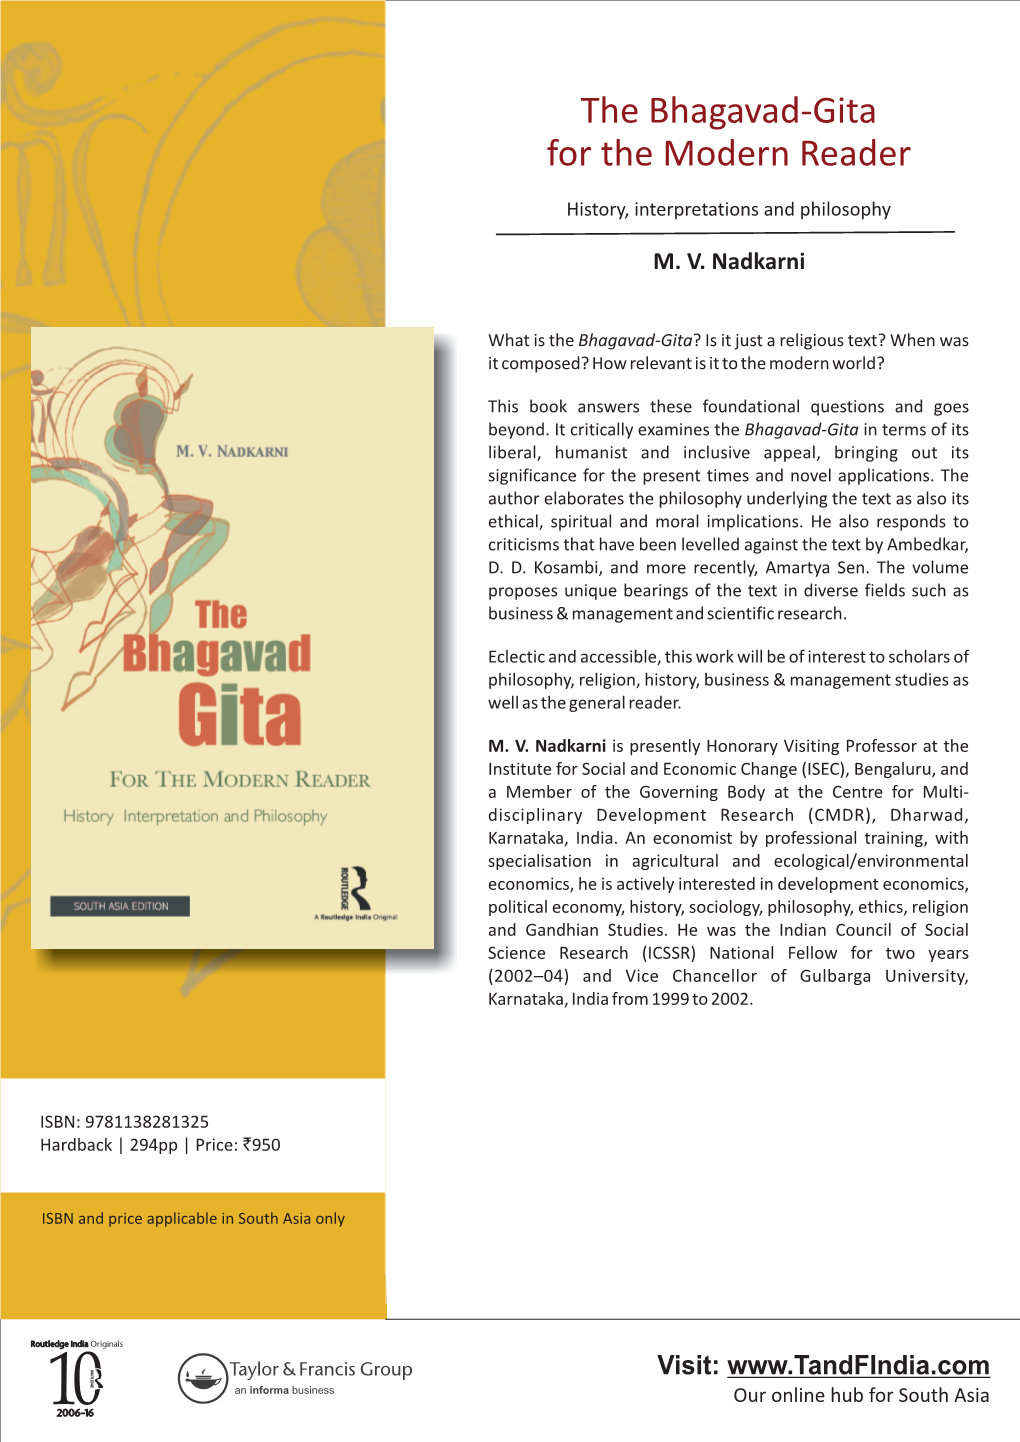 The Bhagavad-Gita for the Modern Reader.Cdr